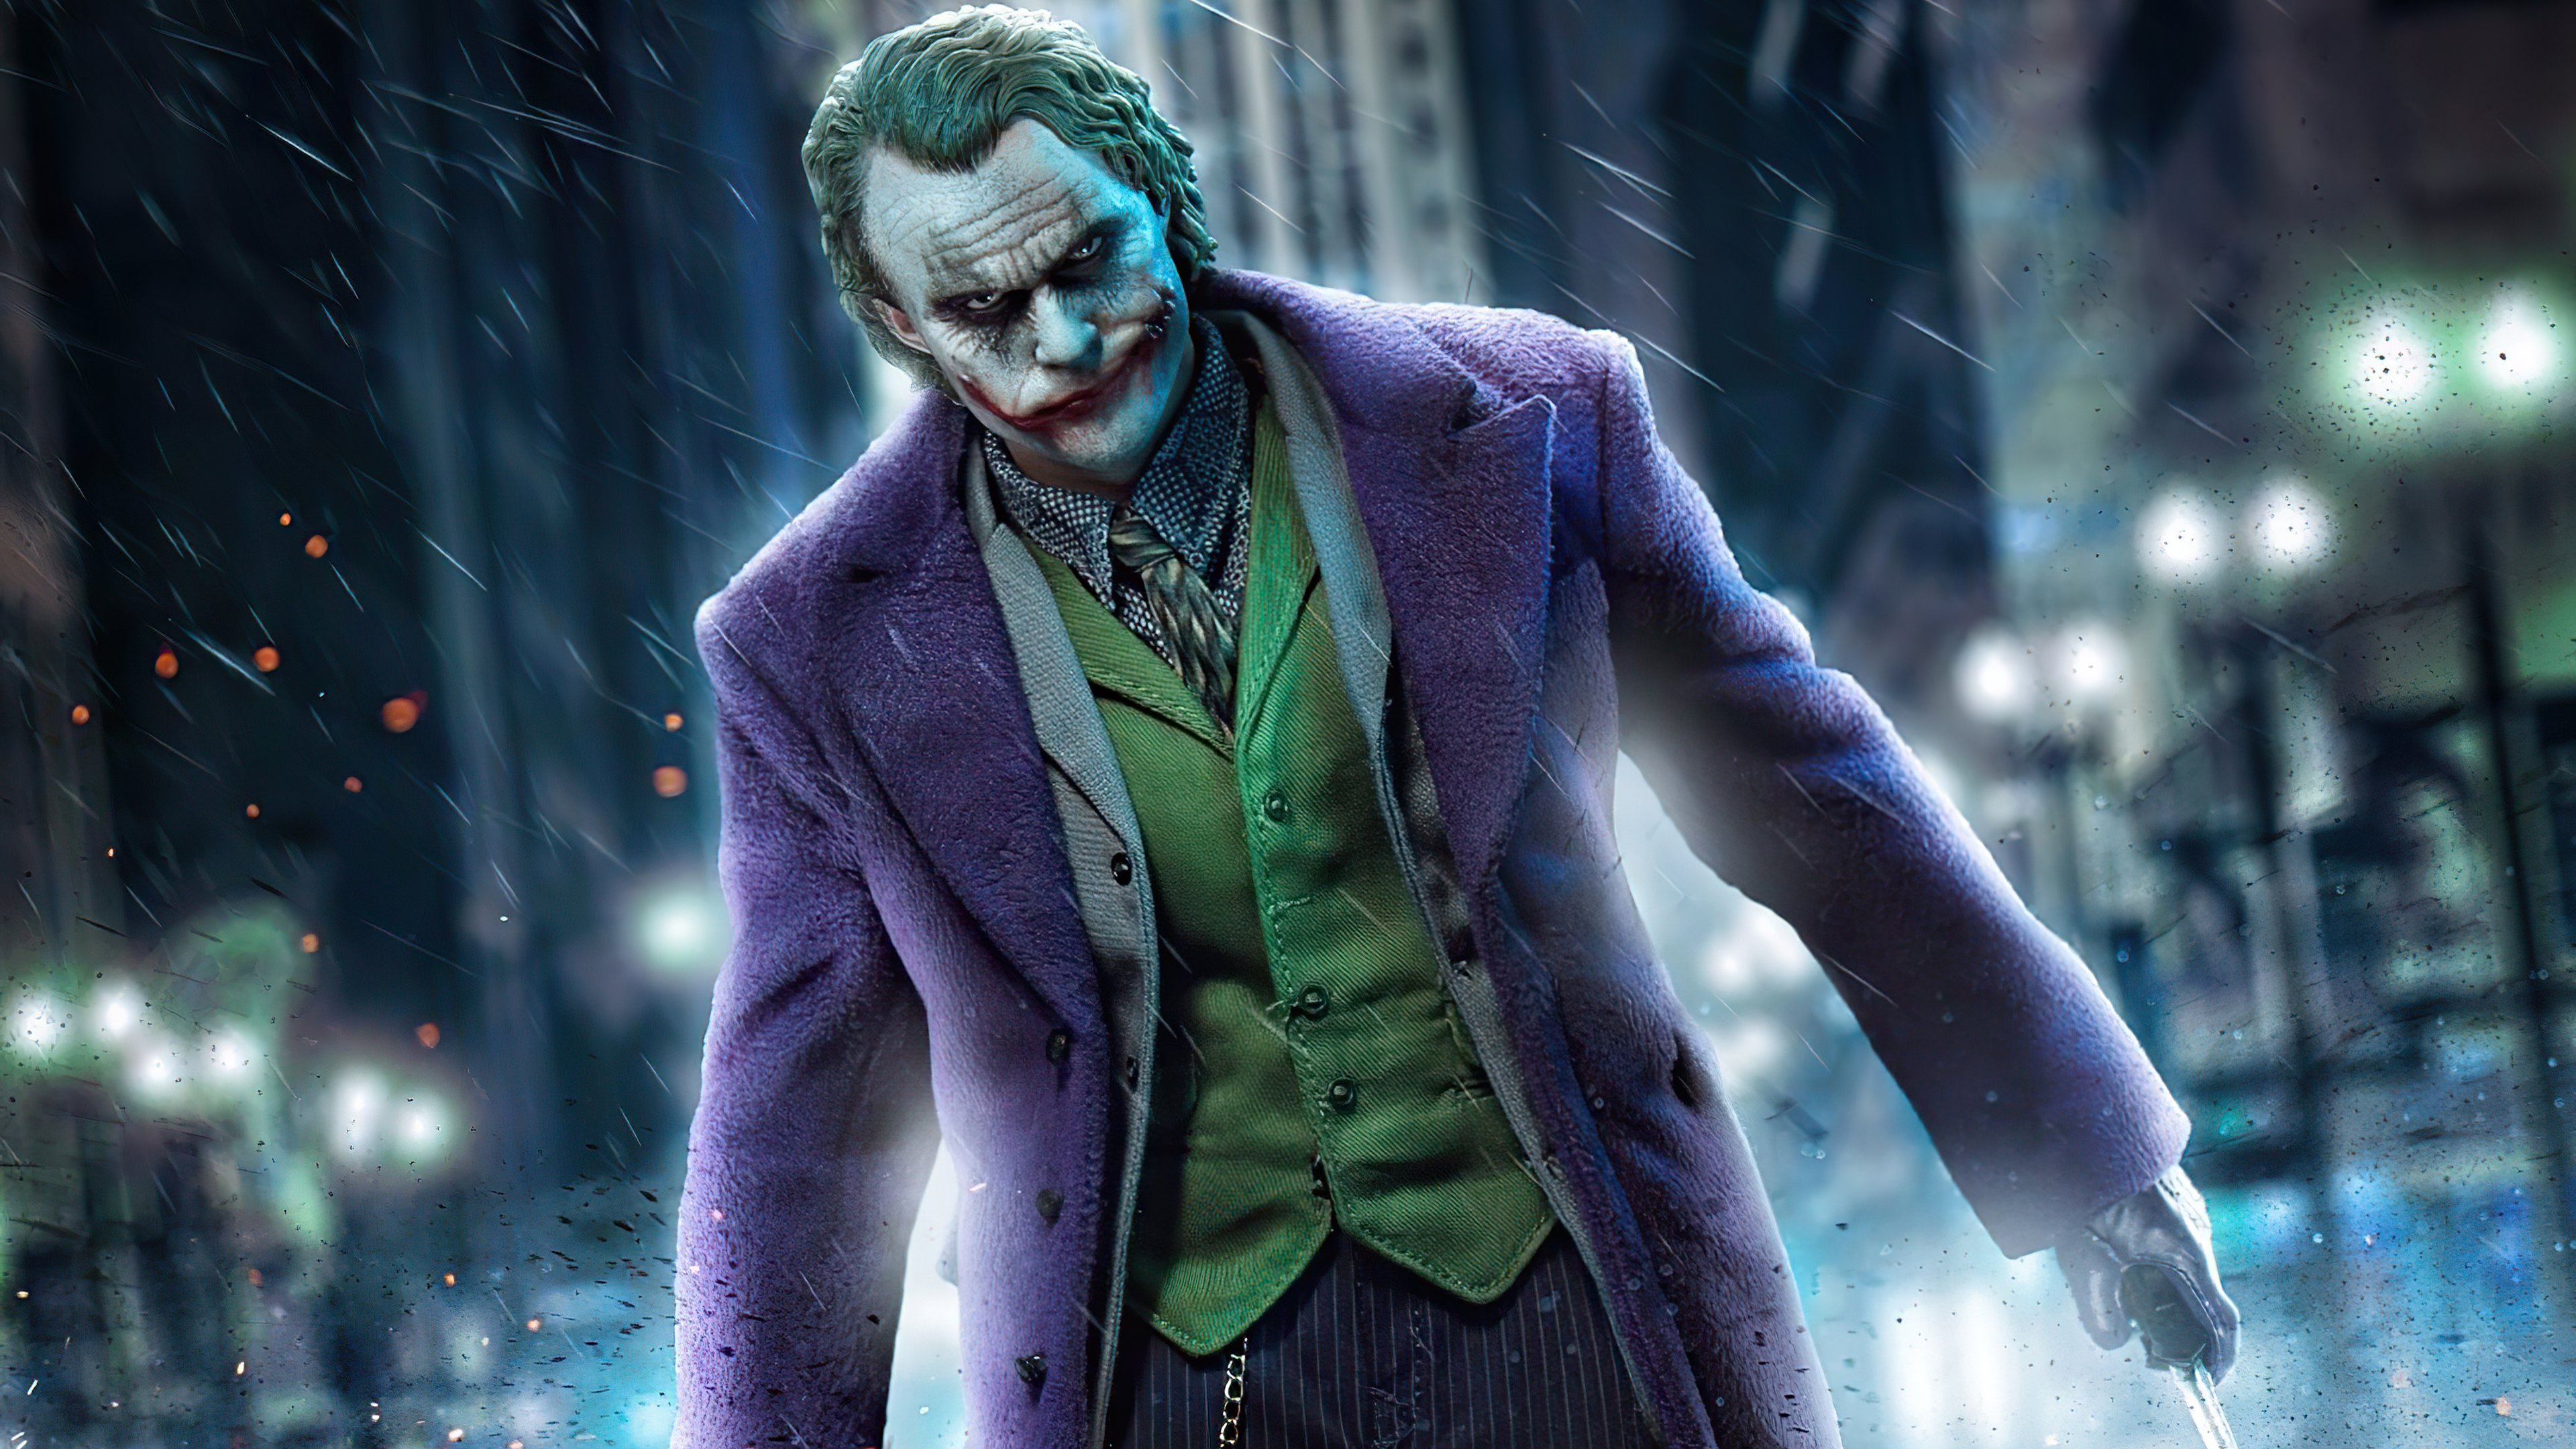 Joker Movie Poster Hd Wallpapers